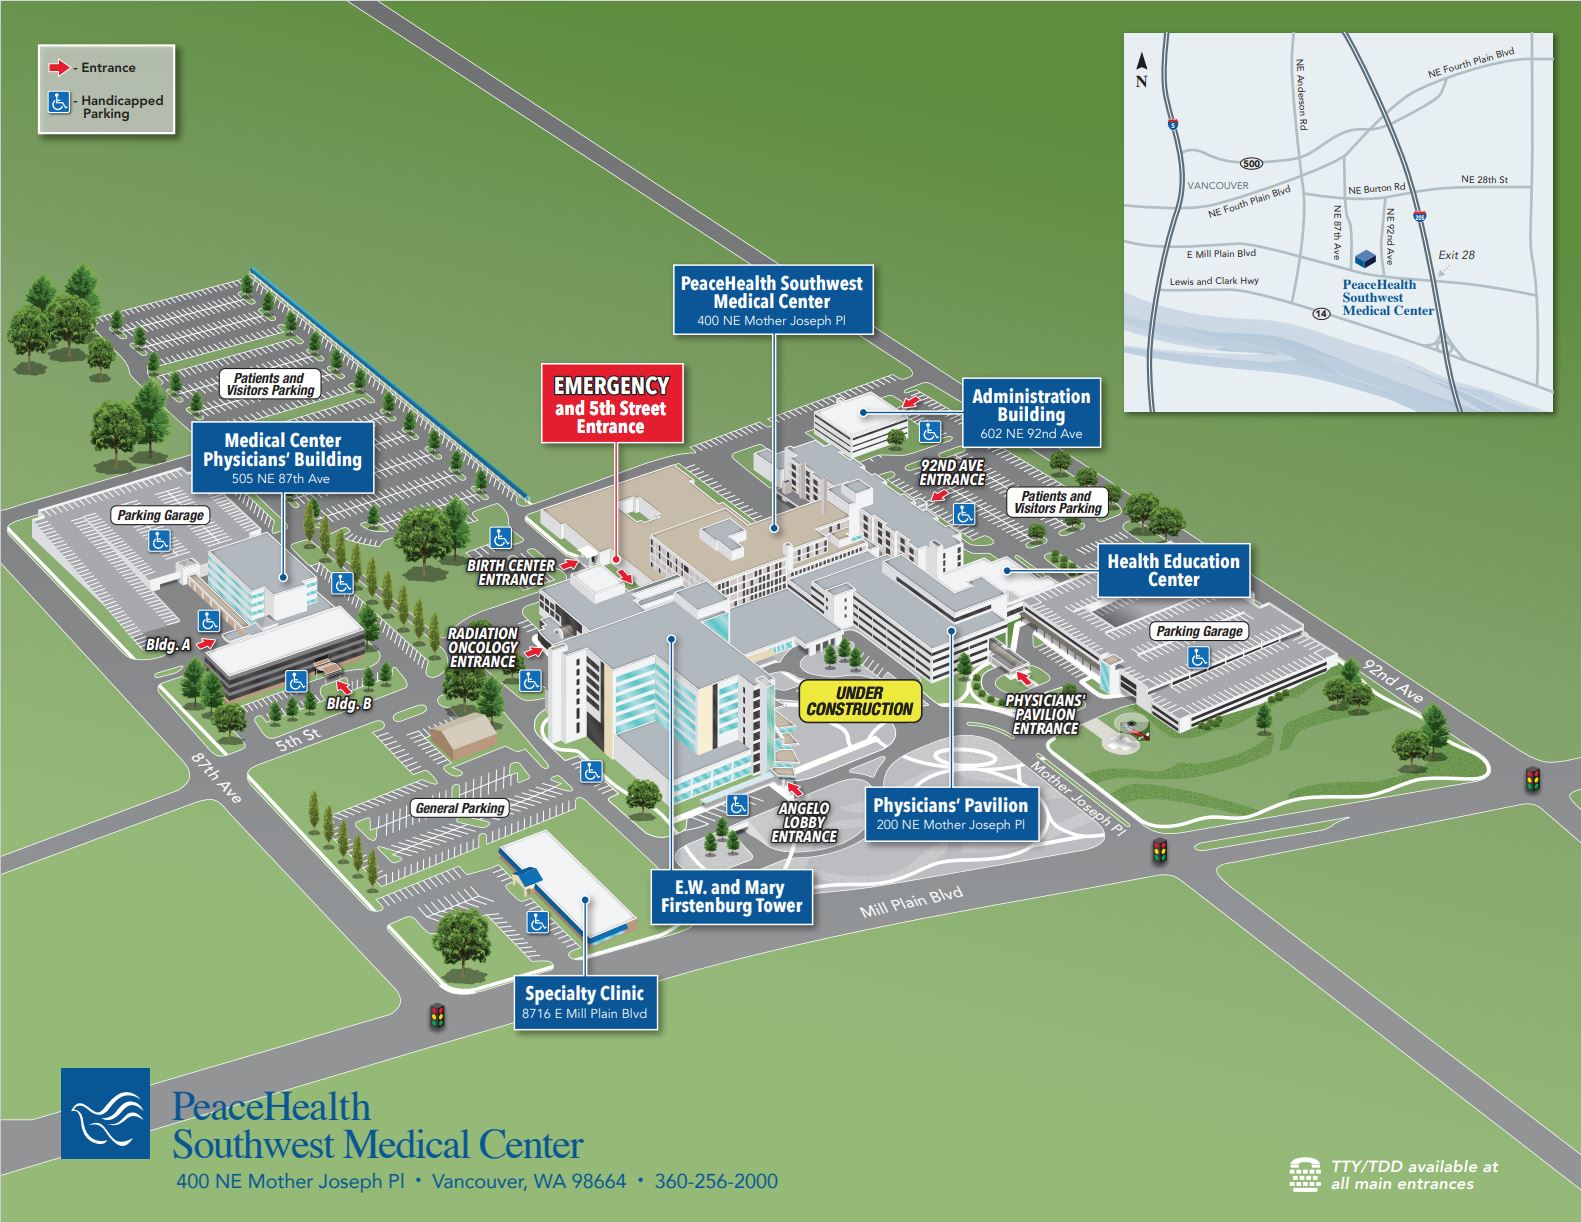 Bird's eye view illustration of Southwest Medical Center campus